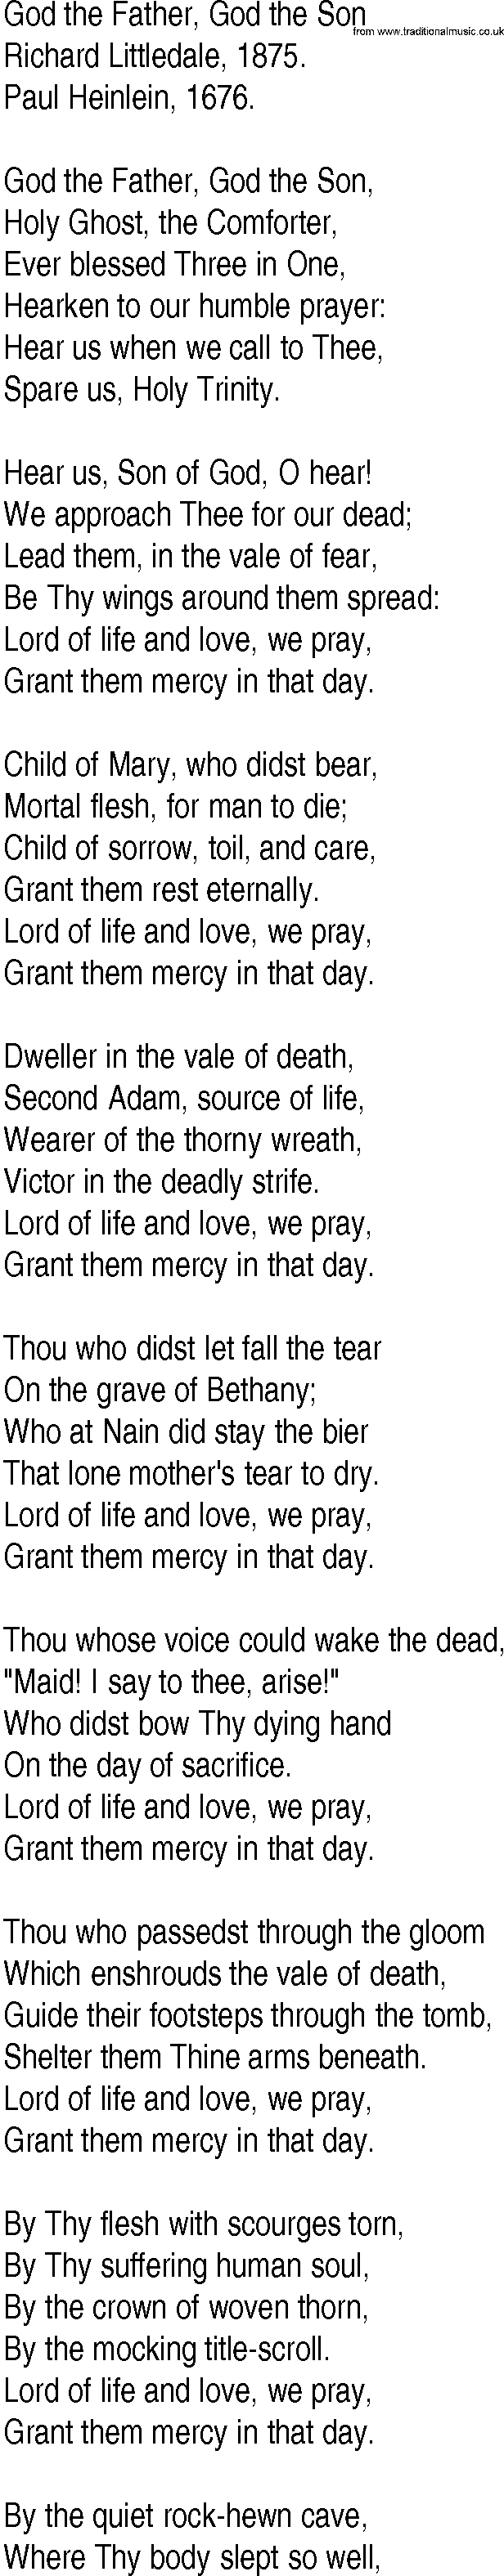 Hymn and Gospel Song: God the Father, God the Son by Richard Littledale lyrics